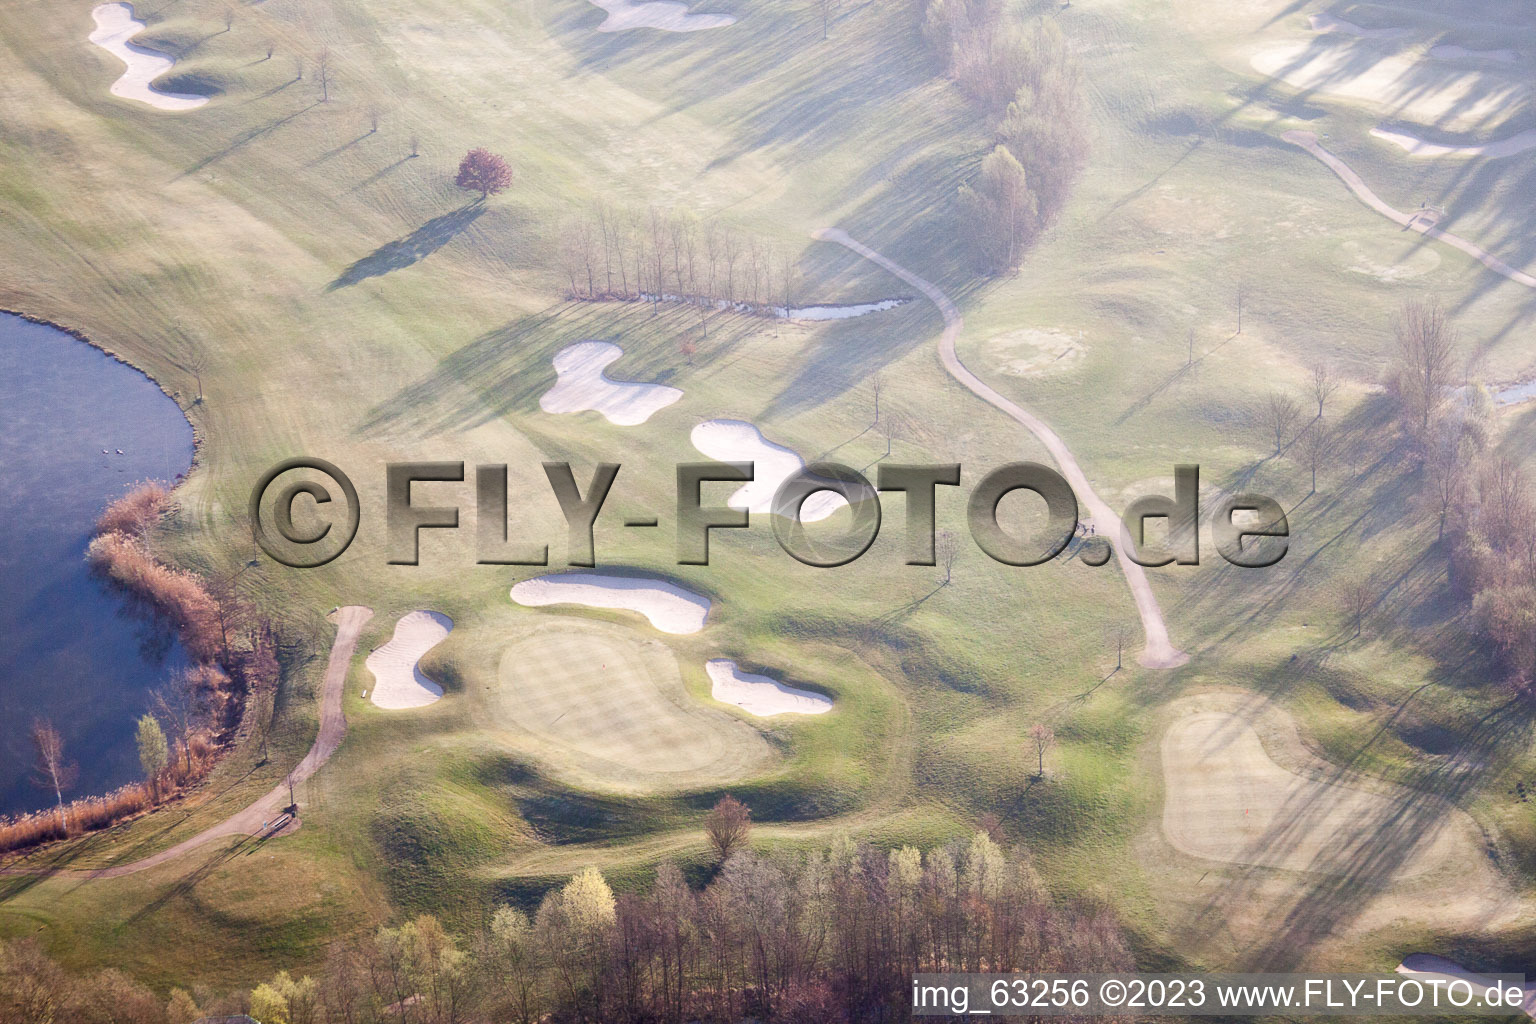 Bird's eye view of Dreihof Golf Club in Essingen in the state Rhineland-Palatinate, Germany